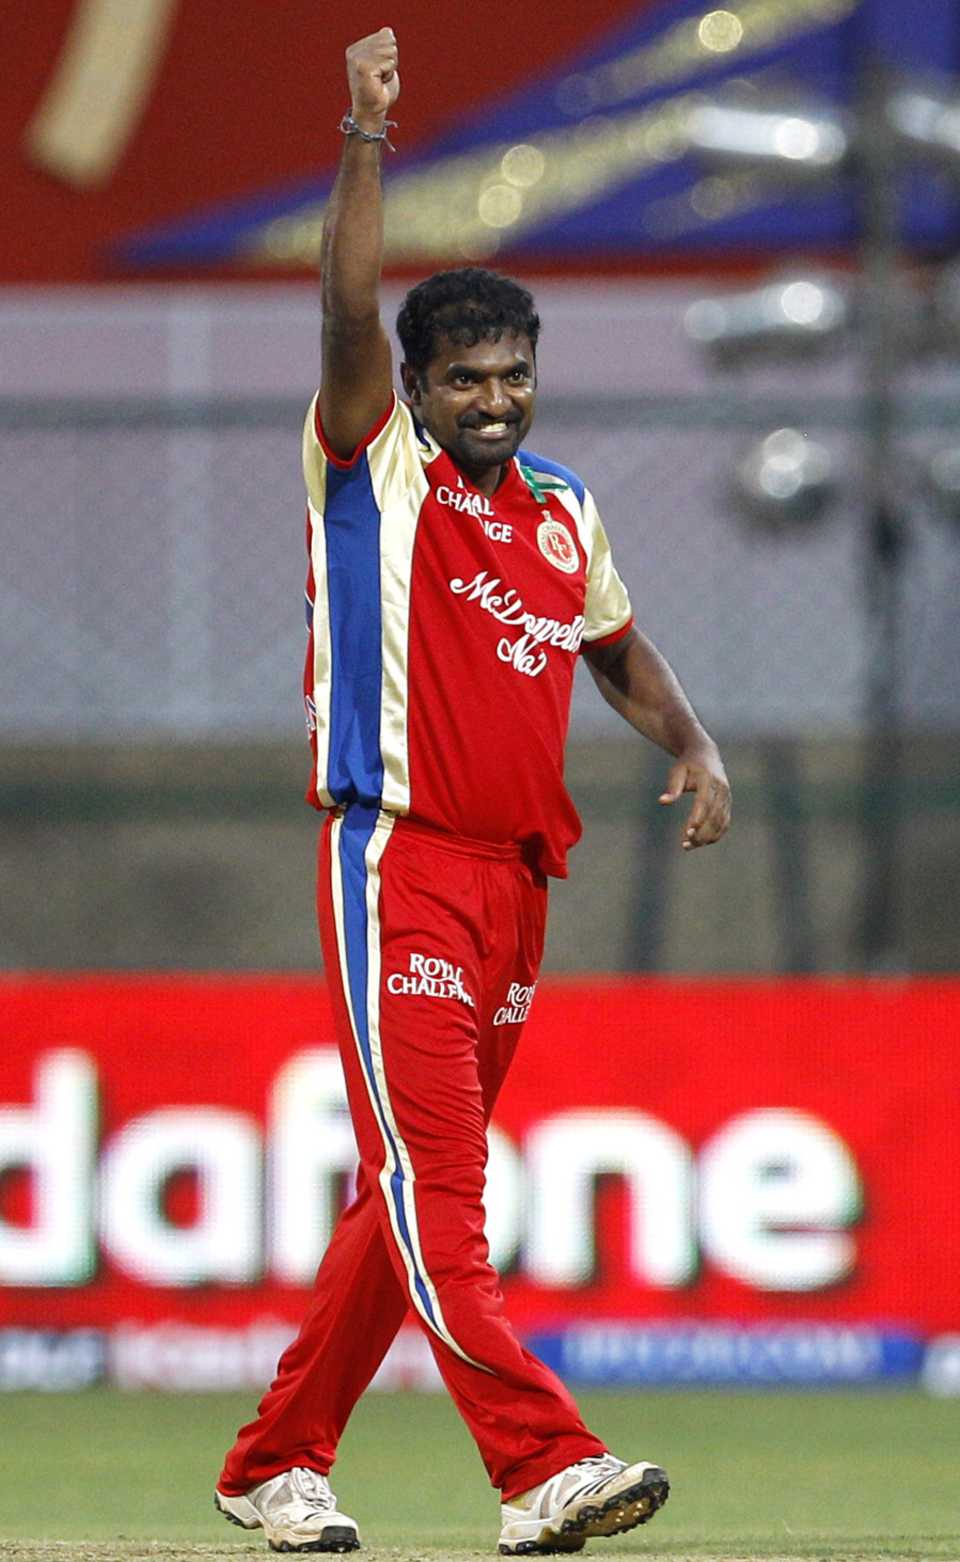 Muttiah Muralitharan picked up three wickets, Royal Challengers Bangalore v Delhi Daredevils, IPL 2012, Bangalore, April 7, 2012